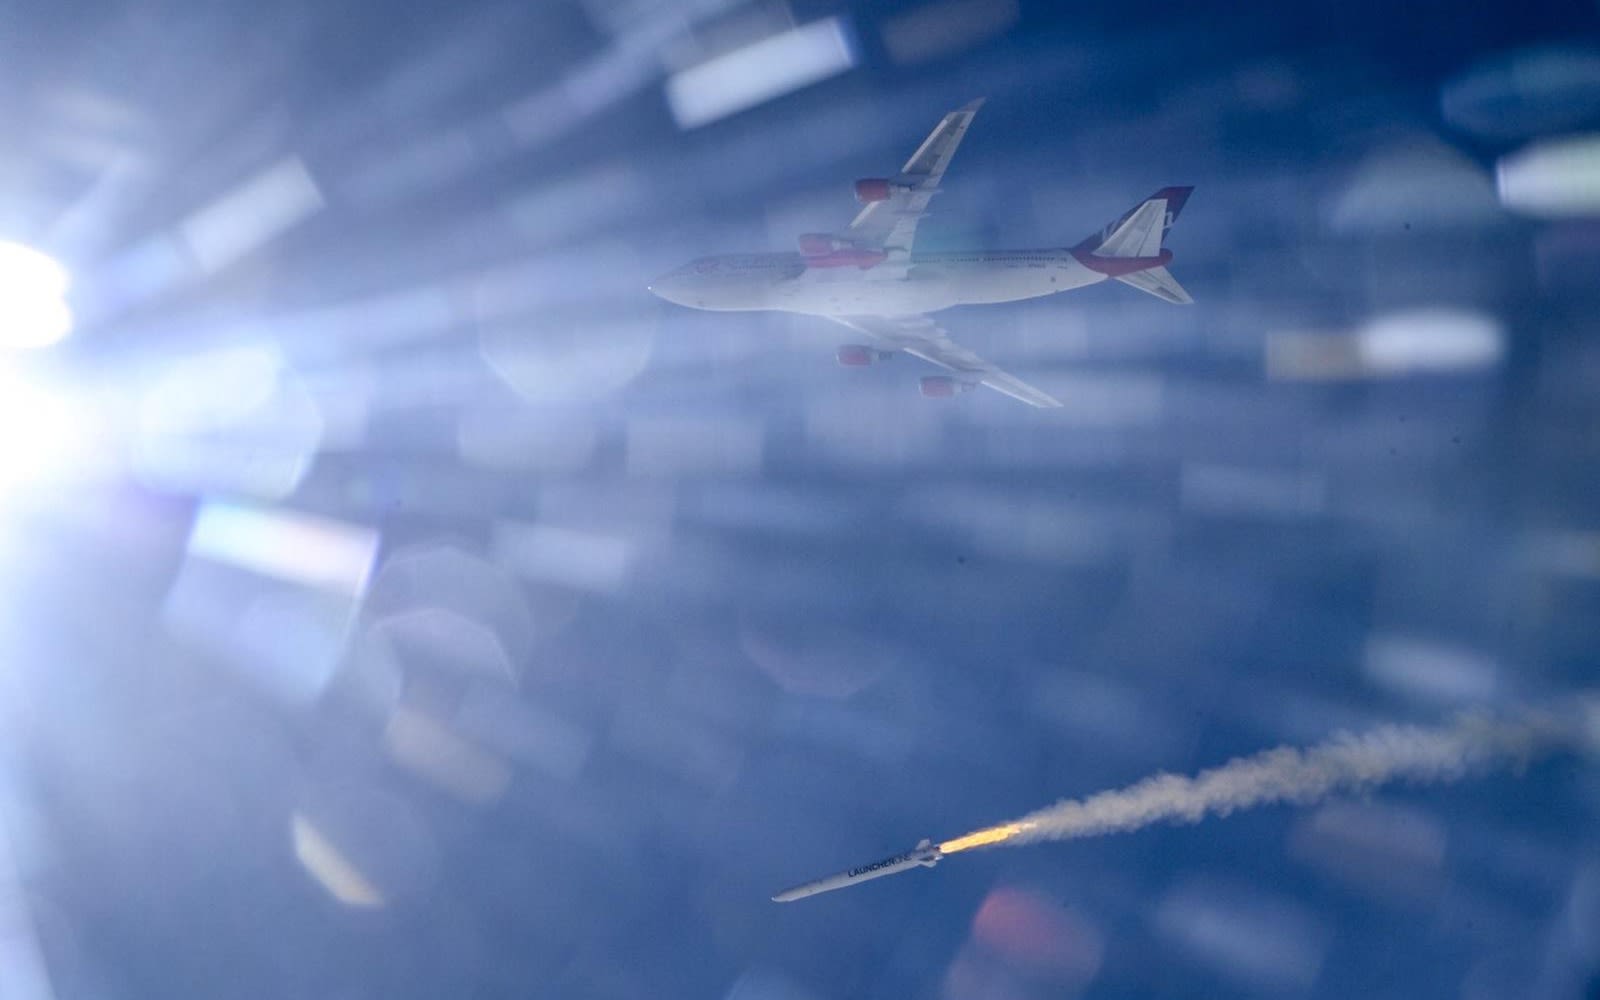 Virgin Orbit's LauncherOne rocket takes off 